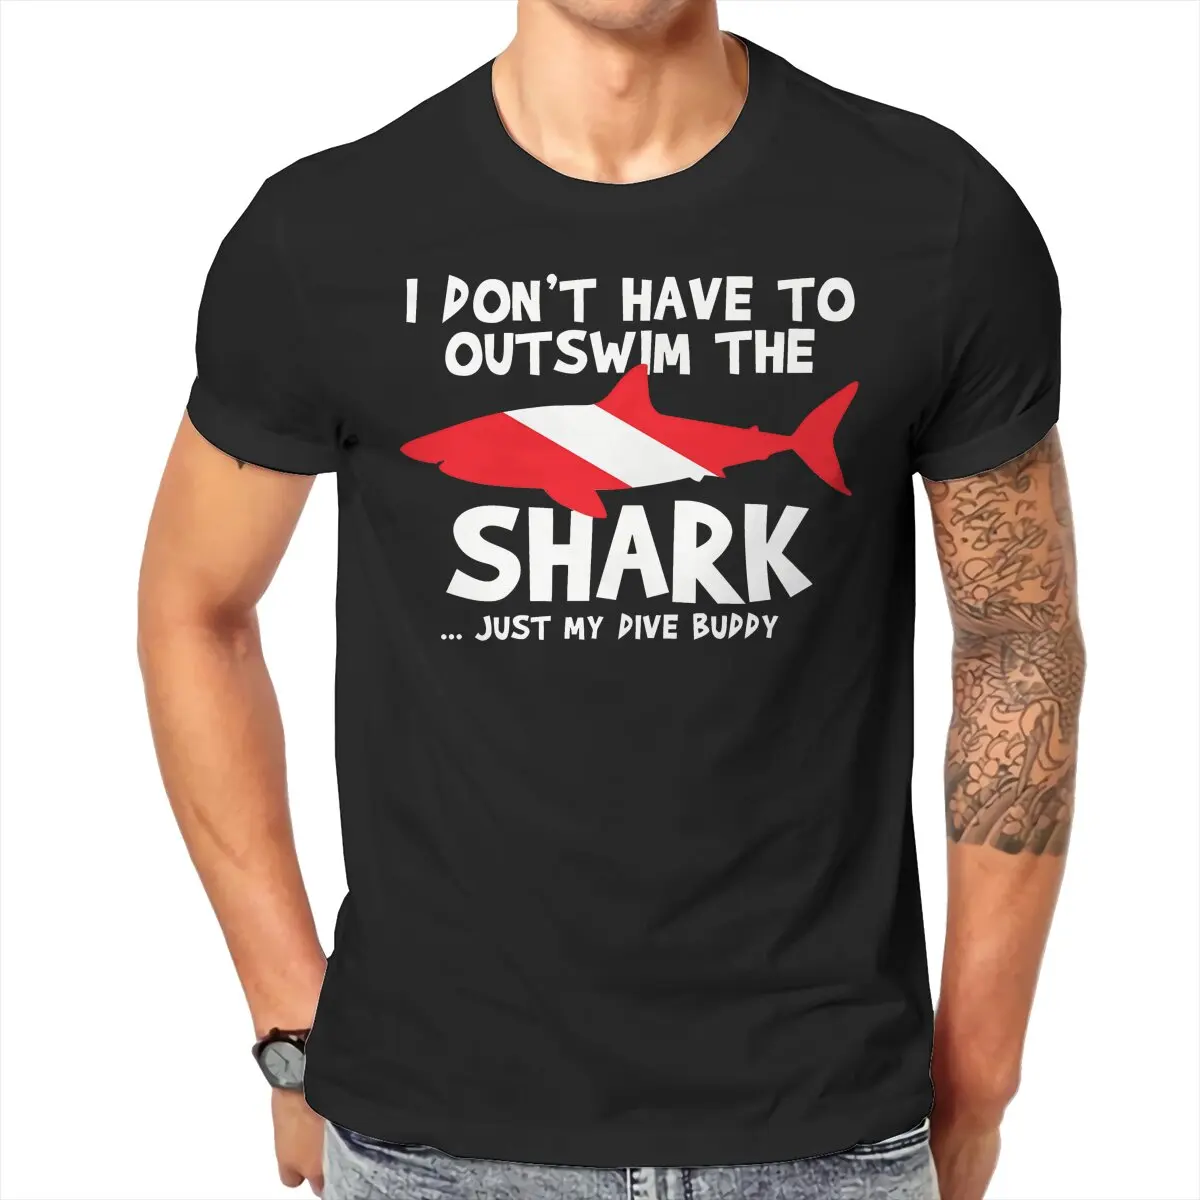 

Shark Scuba Diving Original TShirts Essential Distinctive Homme T Shirt Hipster Tops 6XL